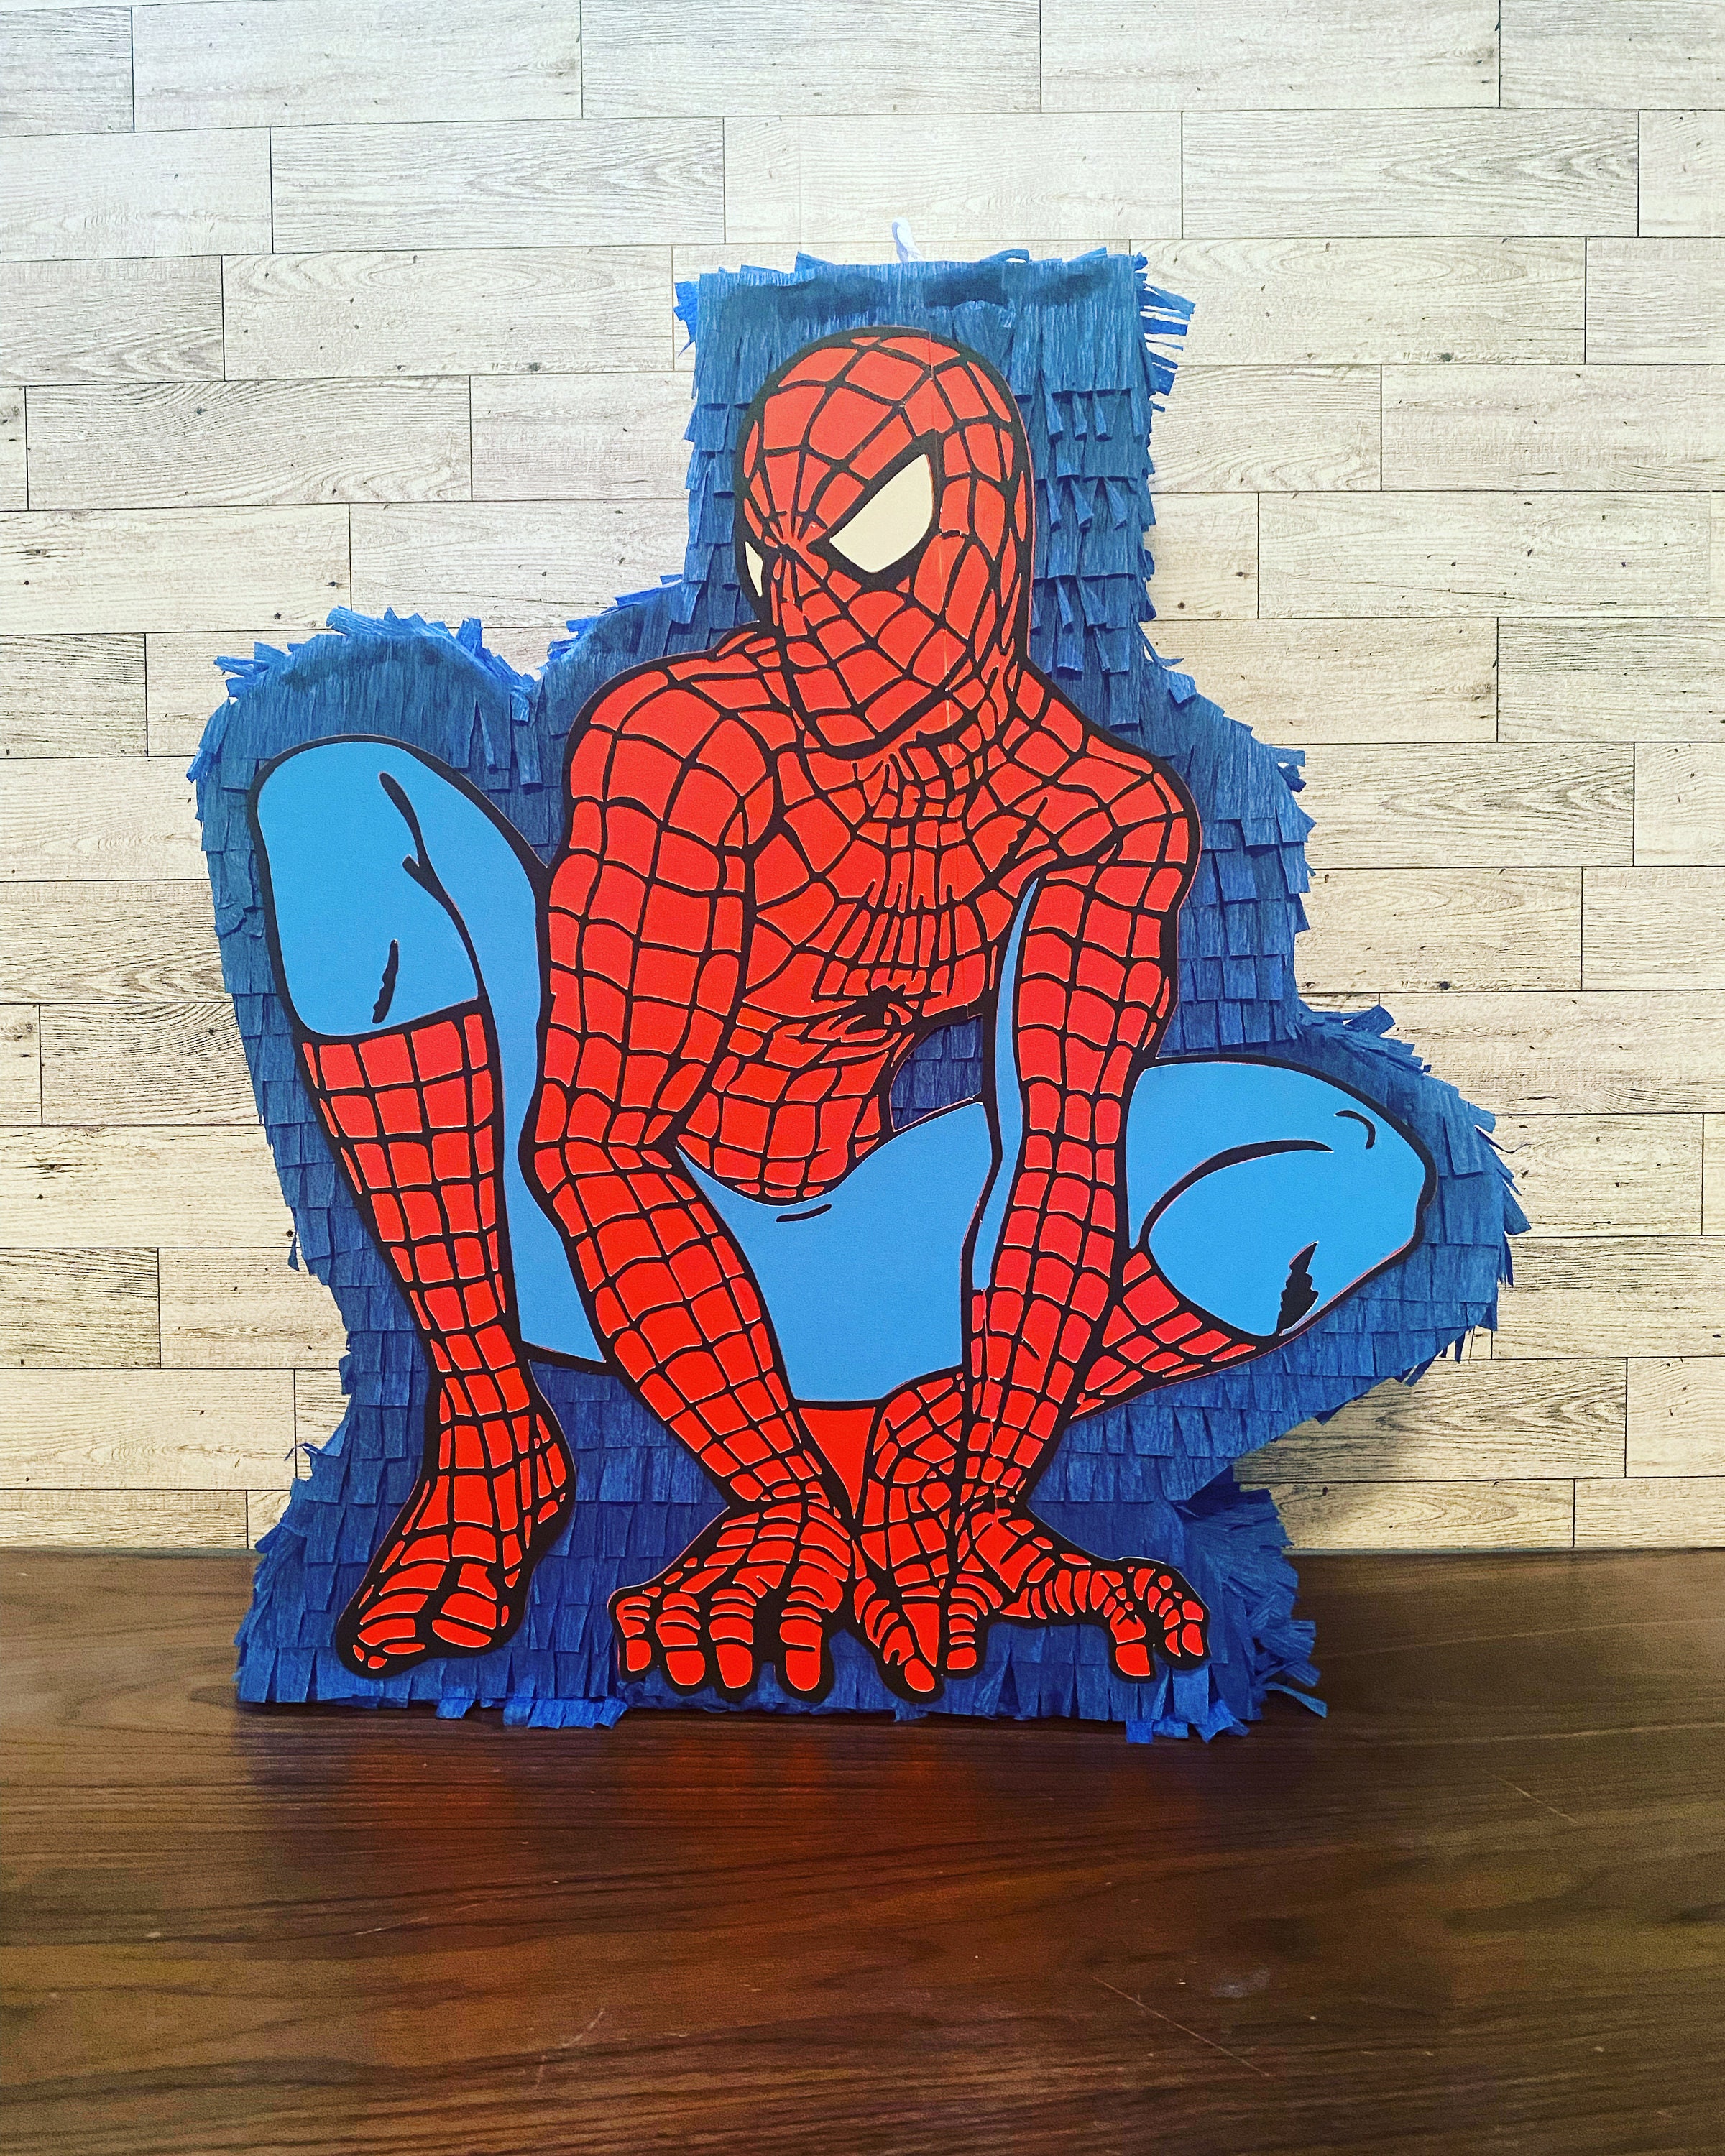 Piñata Spiderman Pequeña - CANDY DEPOT